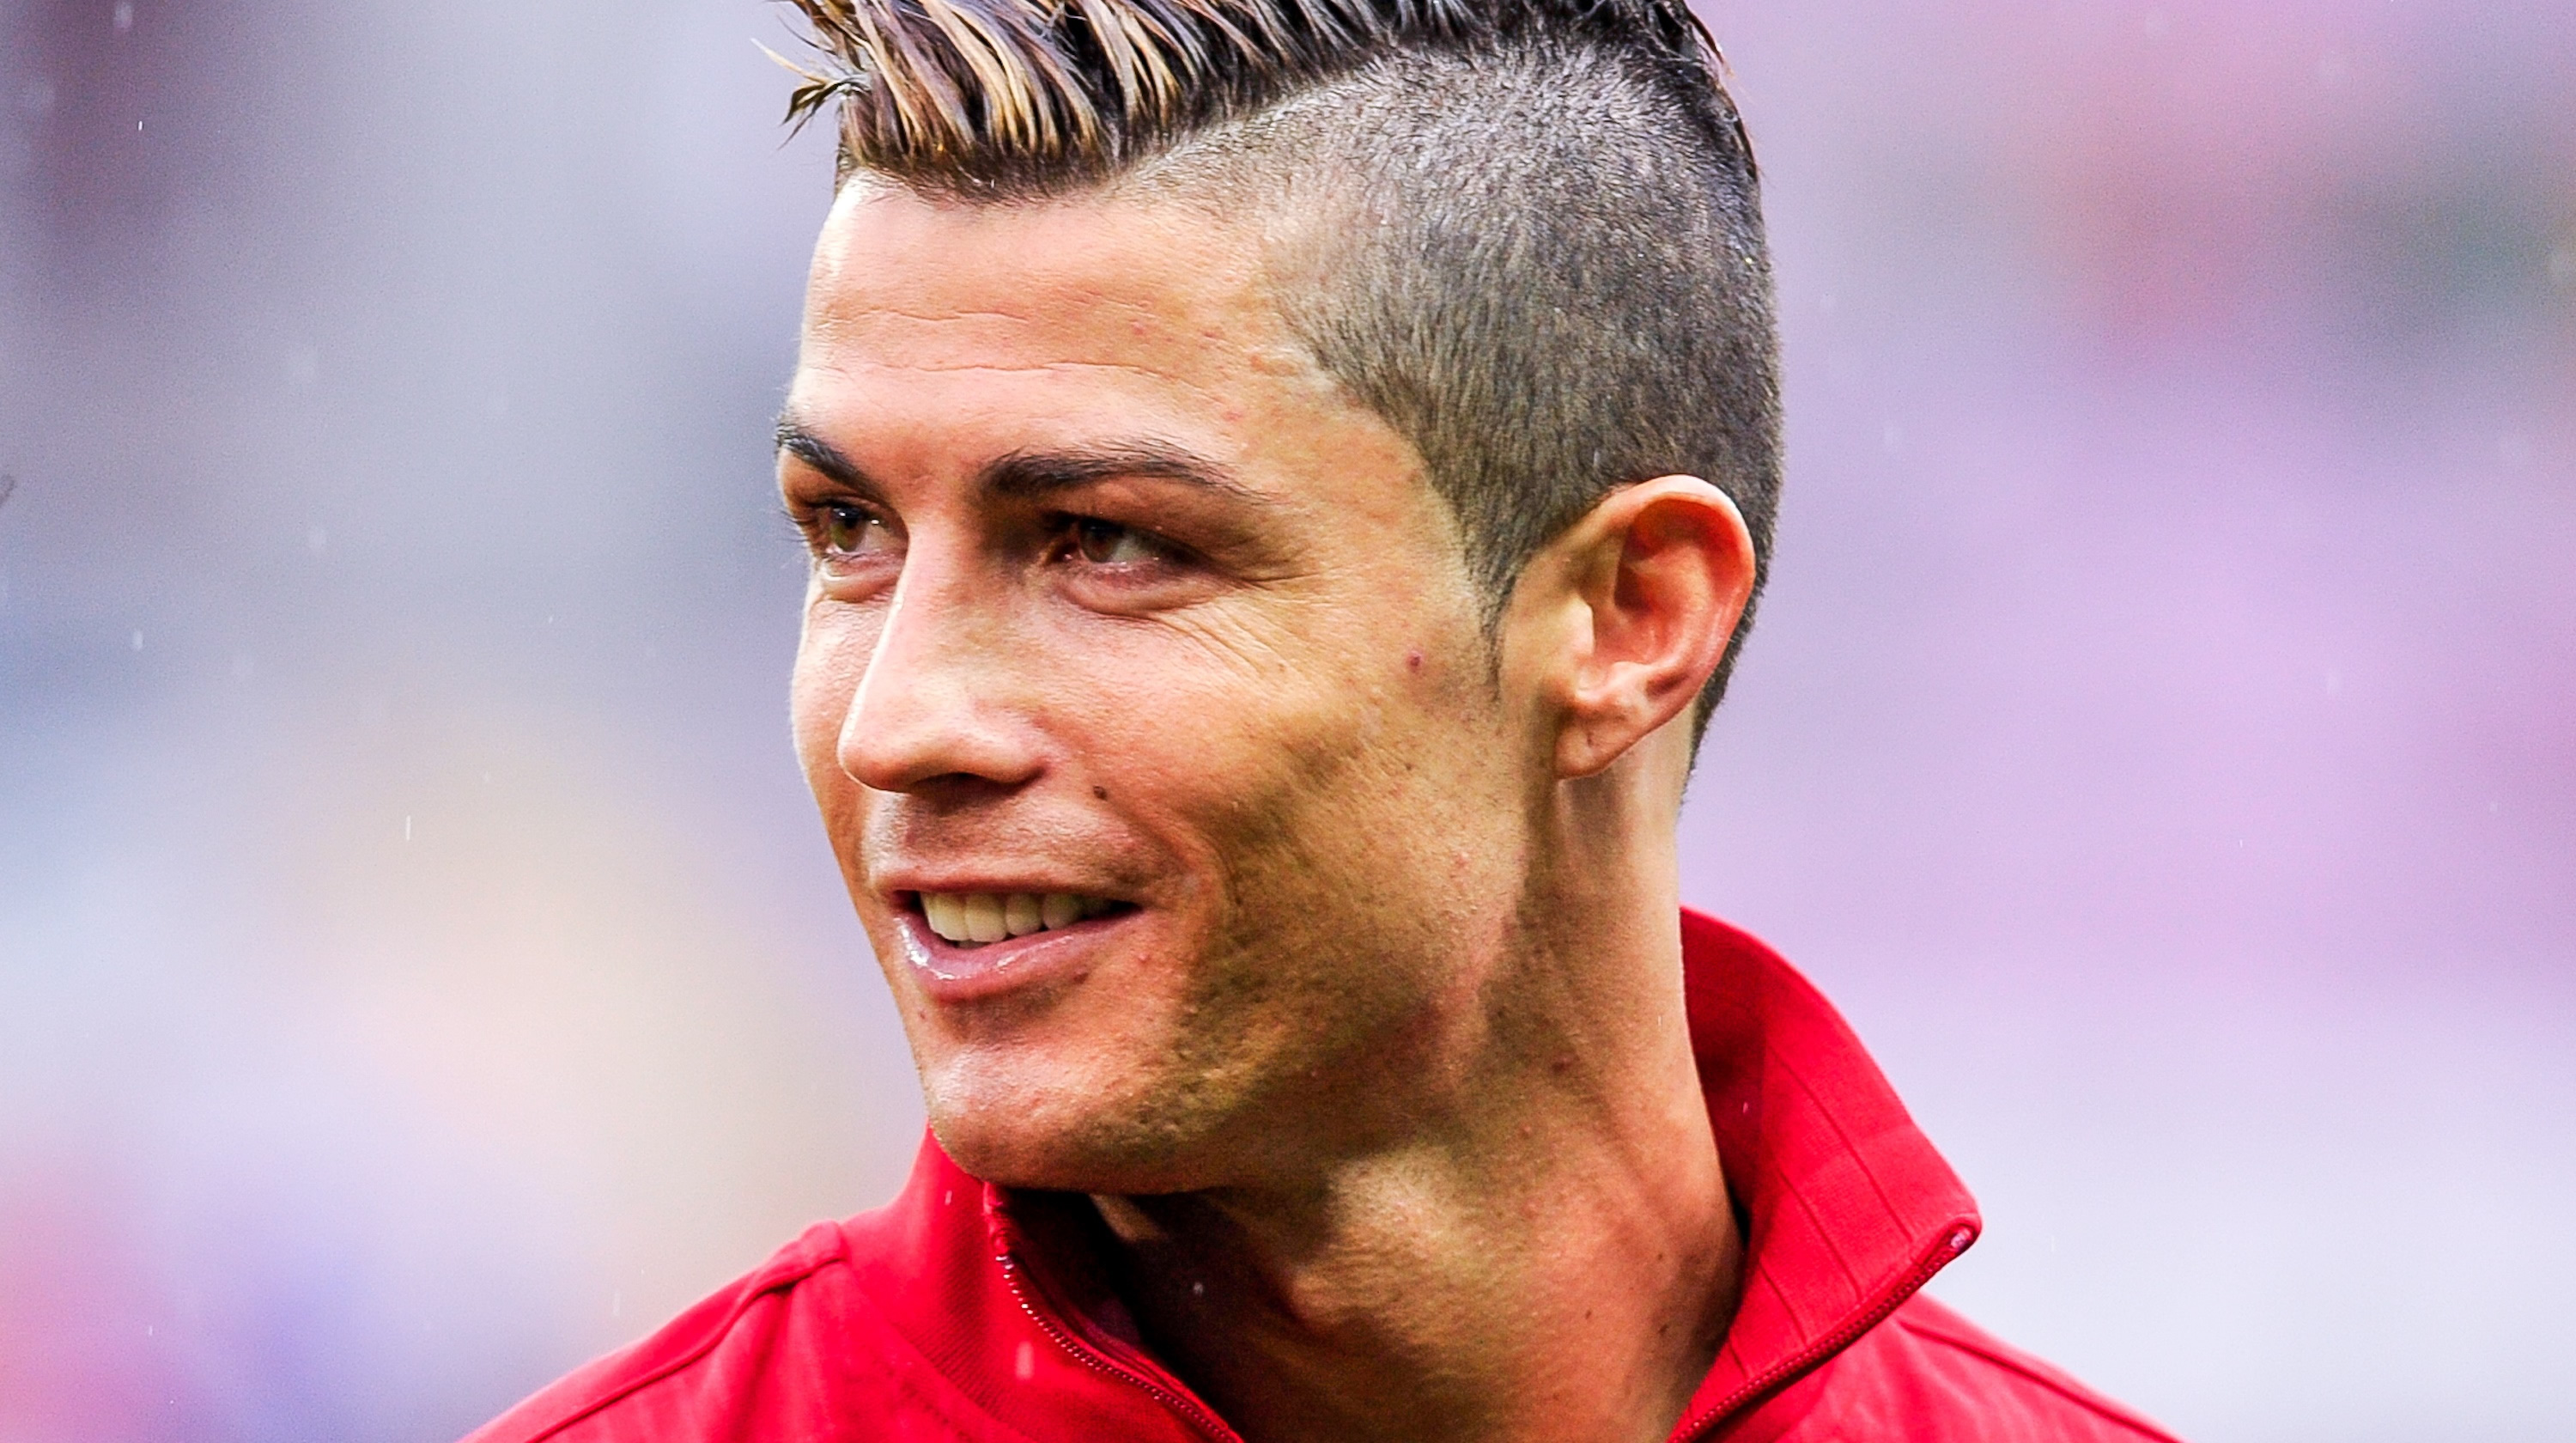 Cristiano Ronaldo 2014 haircut wallpaper